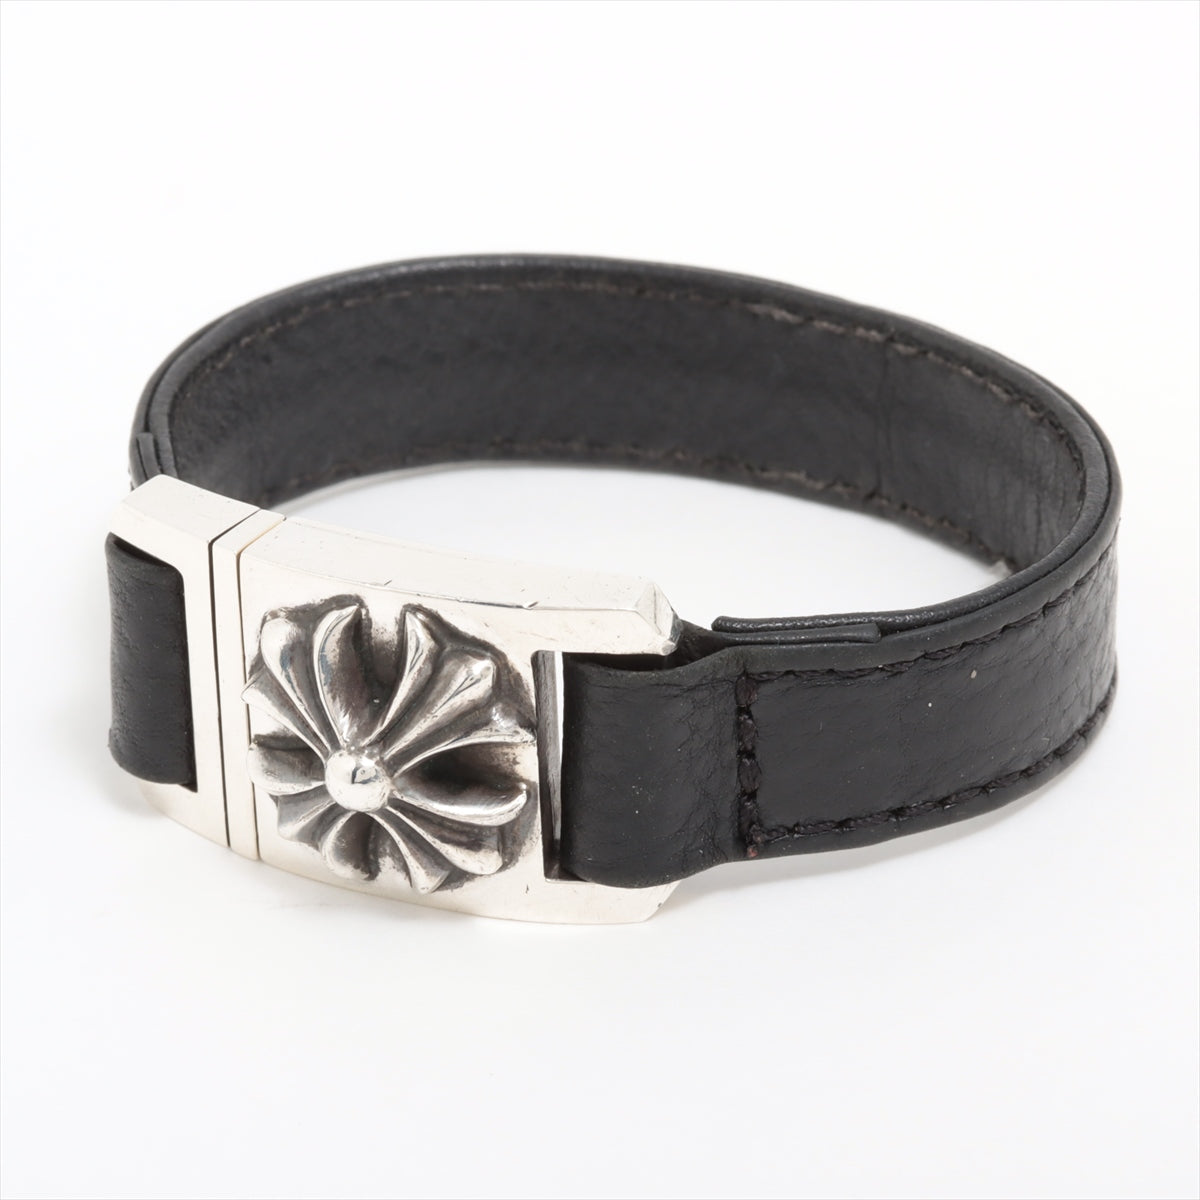 Chrome Hearts harness clasp Bracelet Leather & 925 39.3g size 7